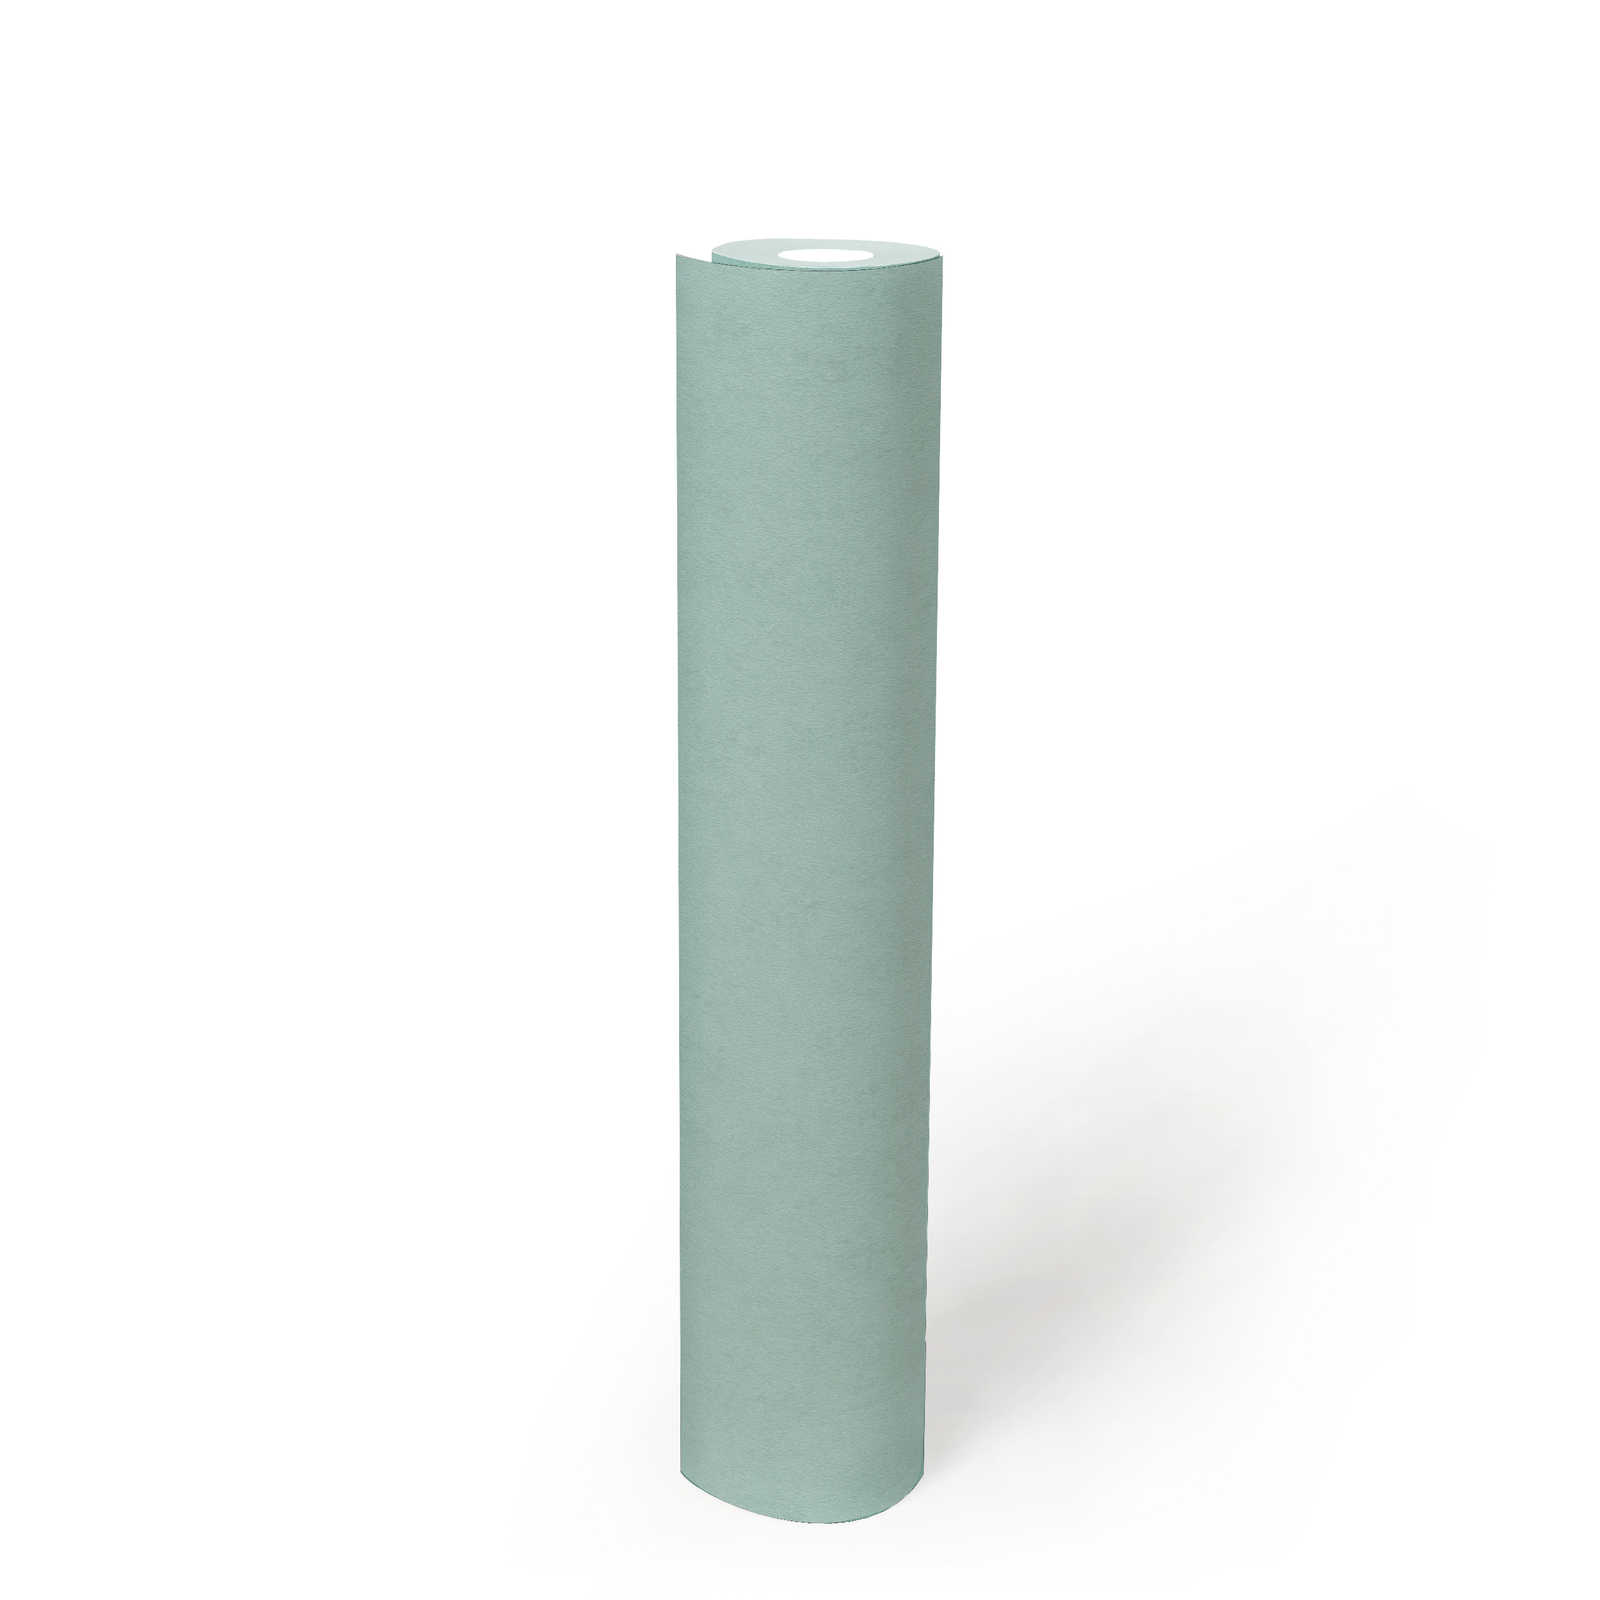             Plain non-woven wallpaper - turquoise
        